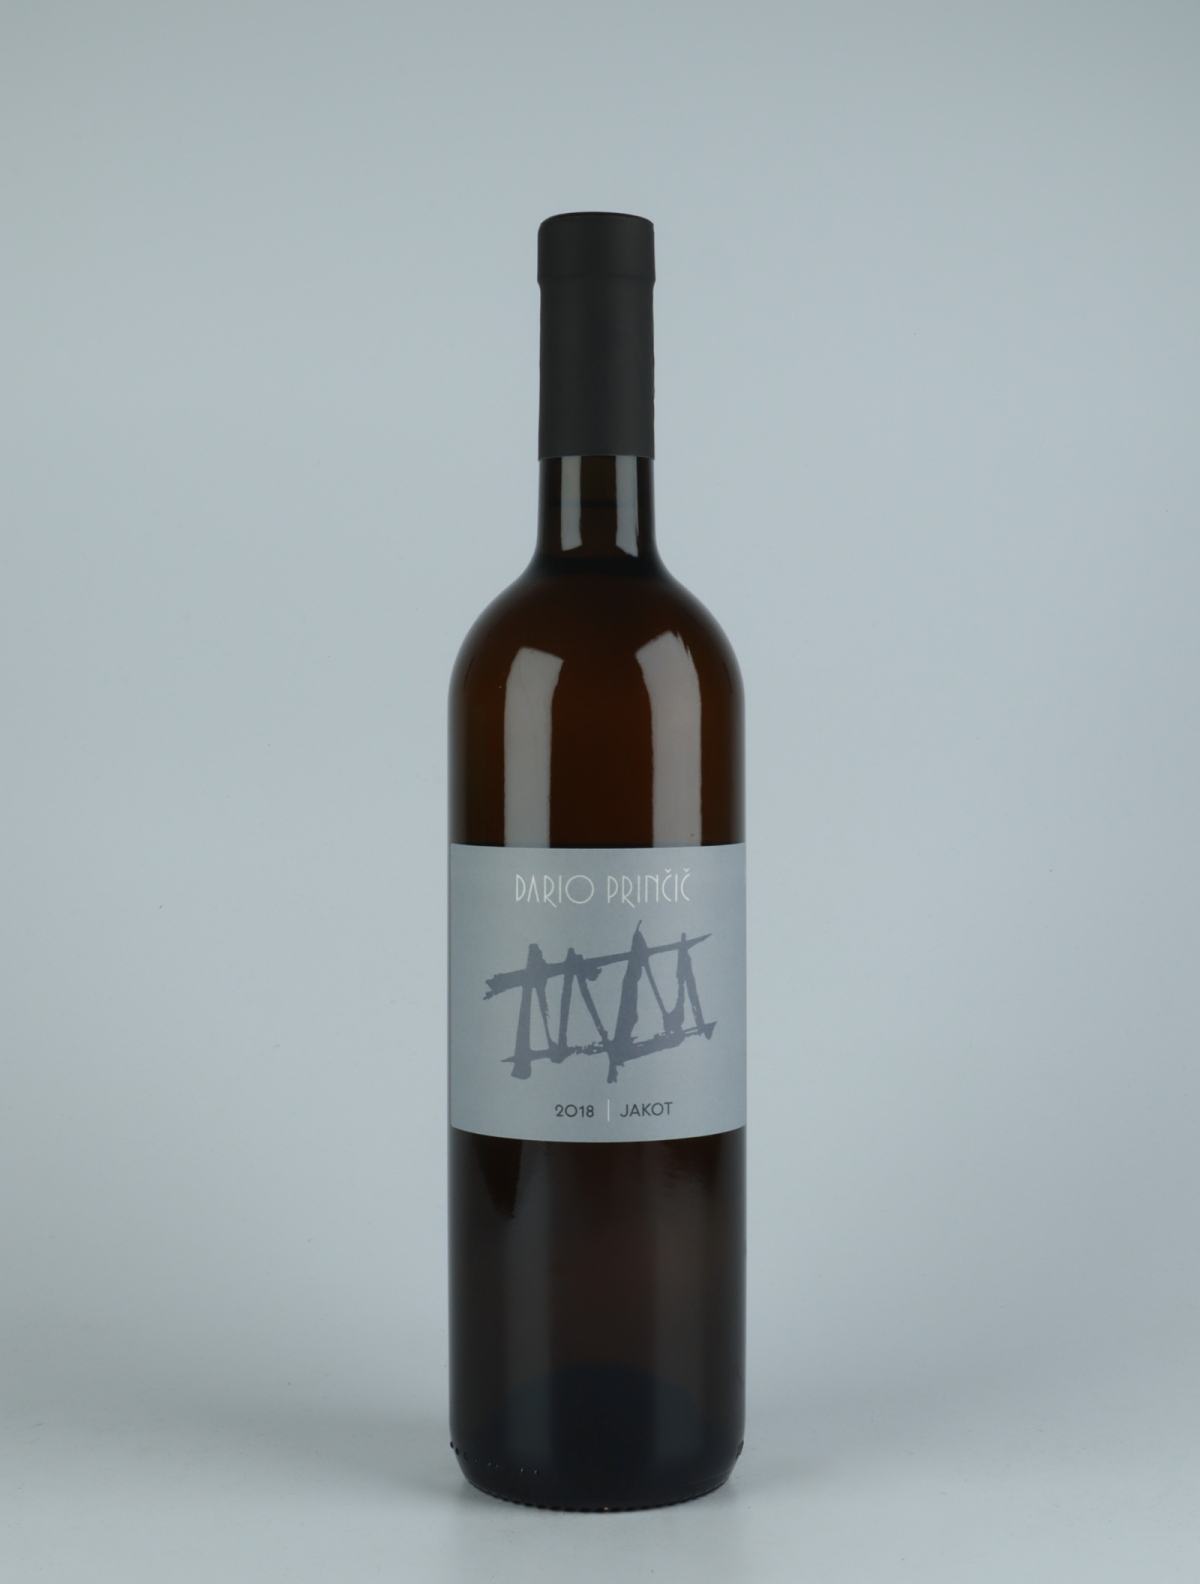 A bottle 2018 Jakot Orange wine from Dario Princic, Friuli in Italy